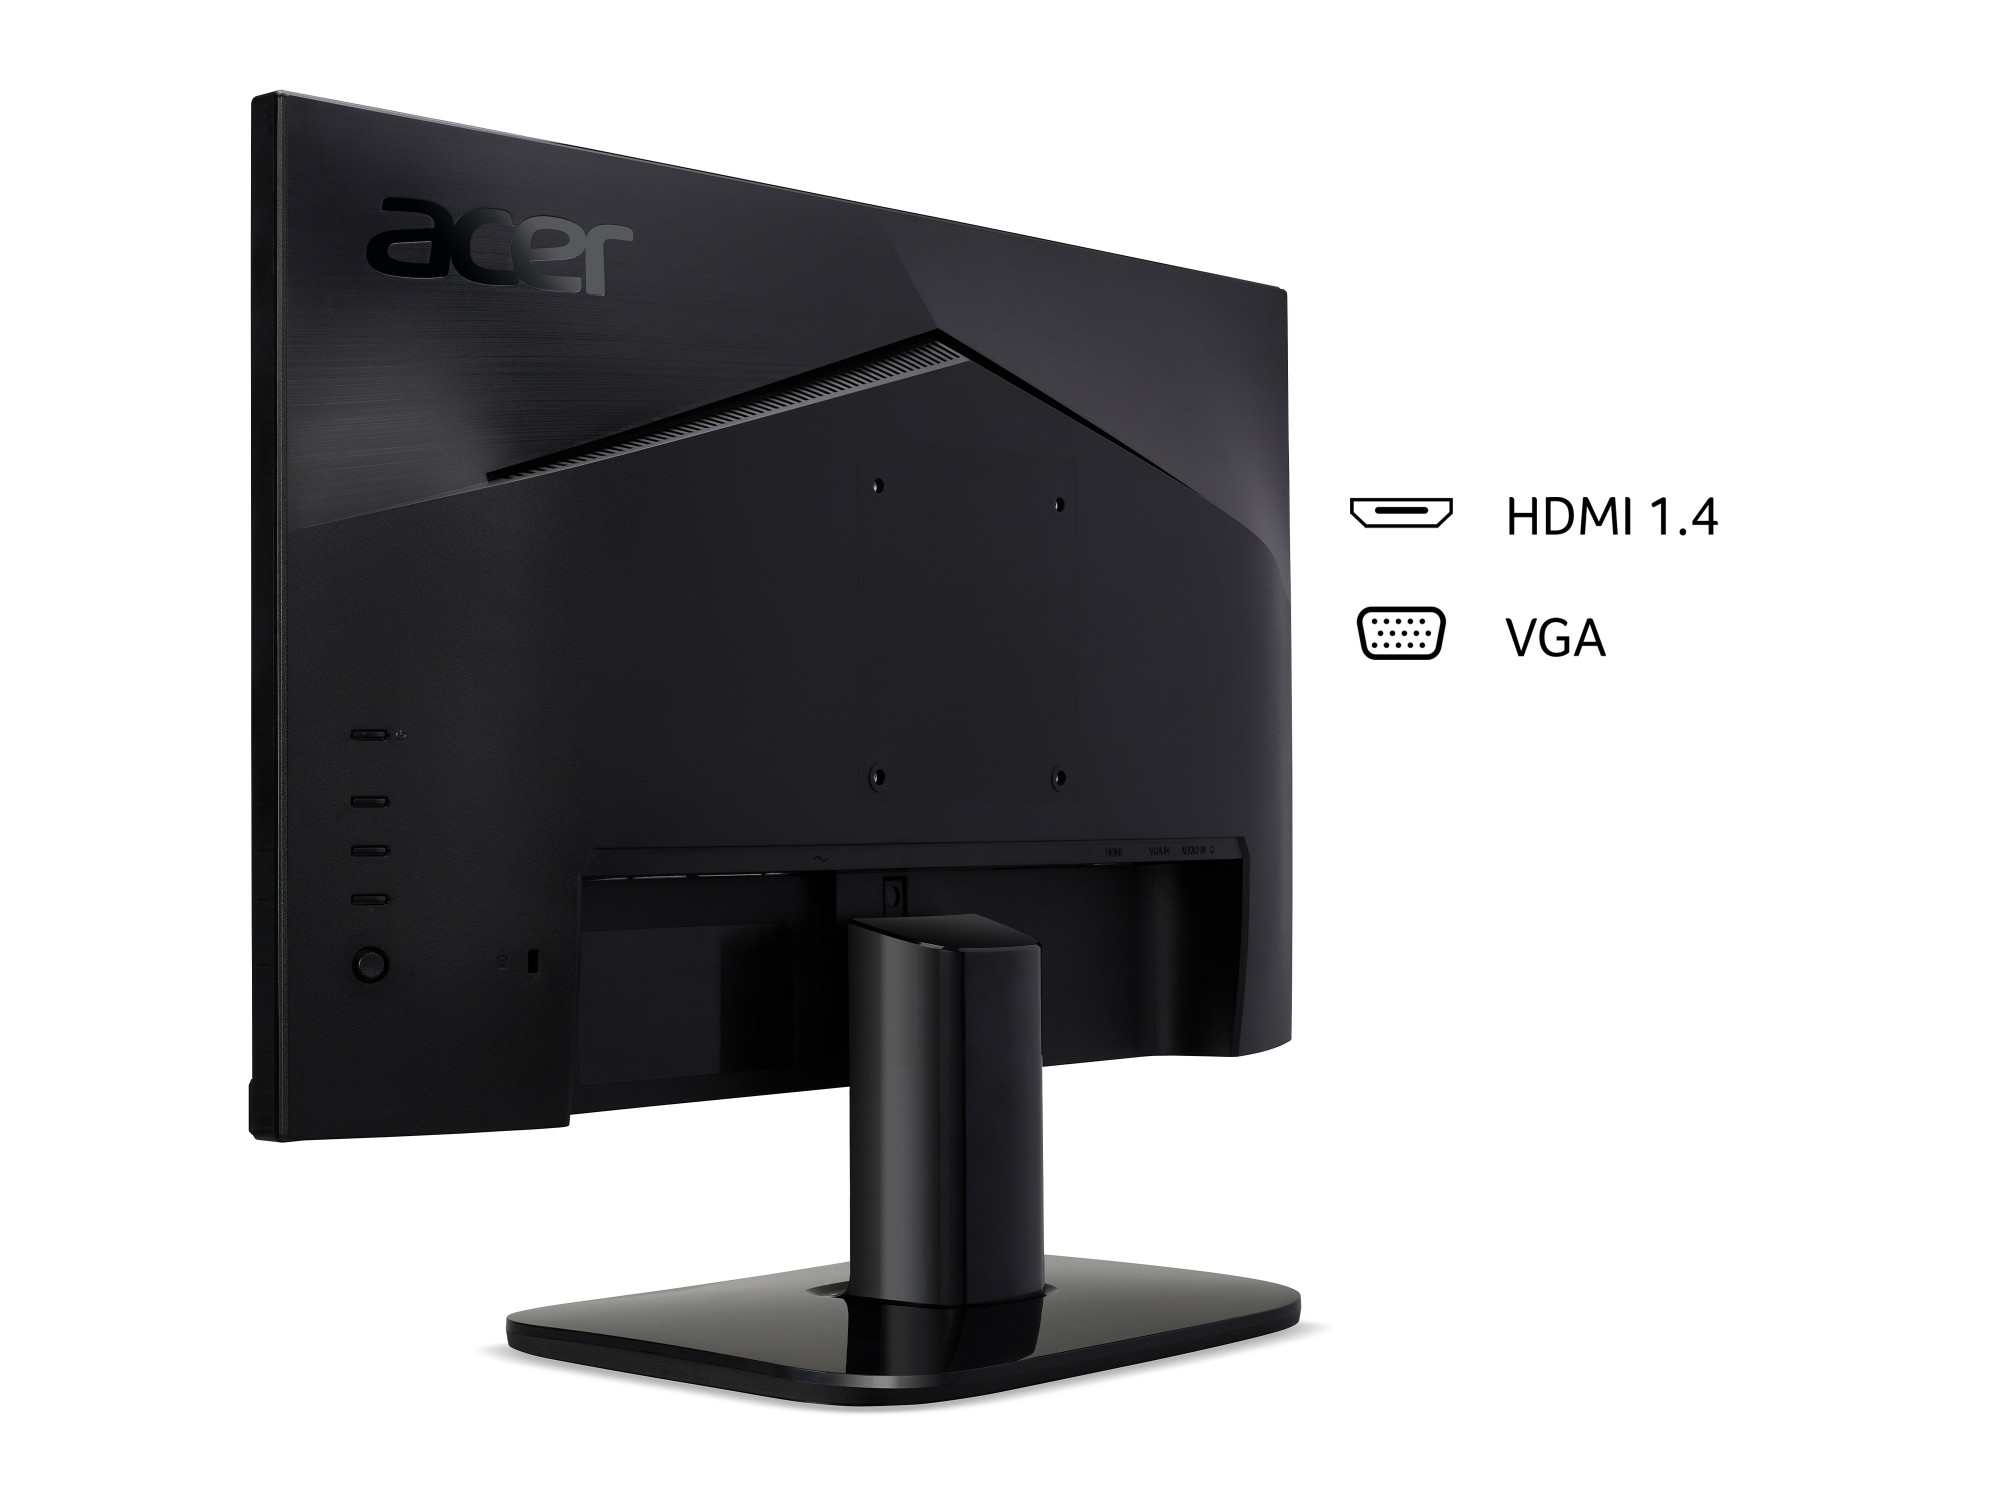 Acer KA2 KA222QE3bi Monitor, 21.5", Full HD (1920x1080), 100Hz Refresh rate, 1Ms Response Time, Zero Frame, IPS, Freesync